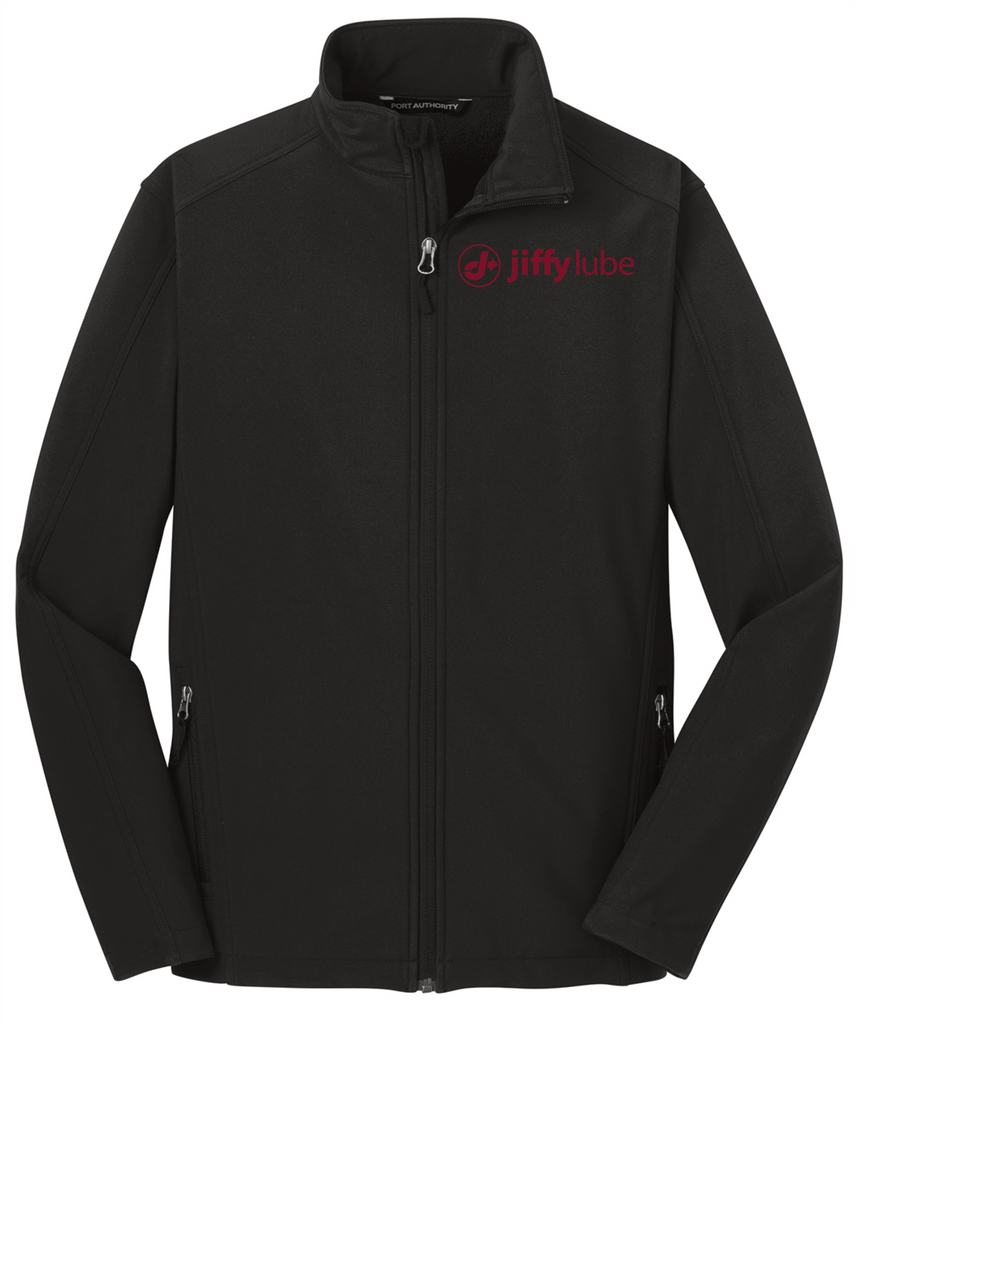 Jiffy Lube Soft Shell Jacket - A&A Custom Wear